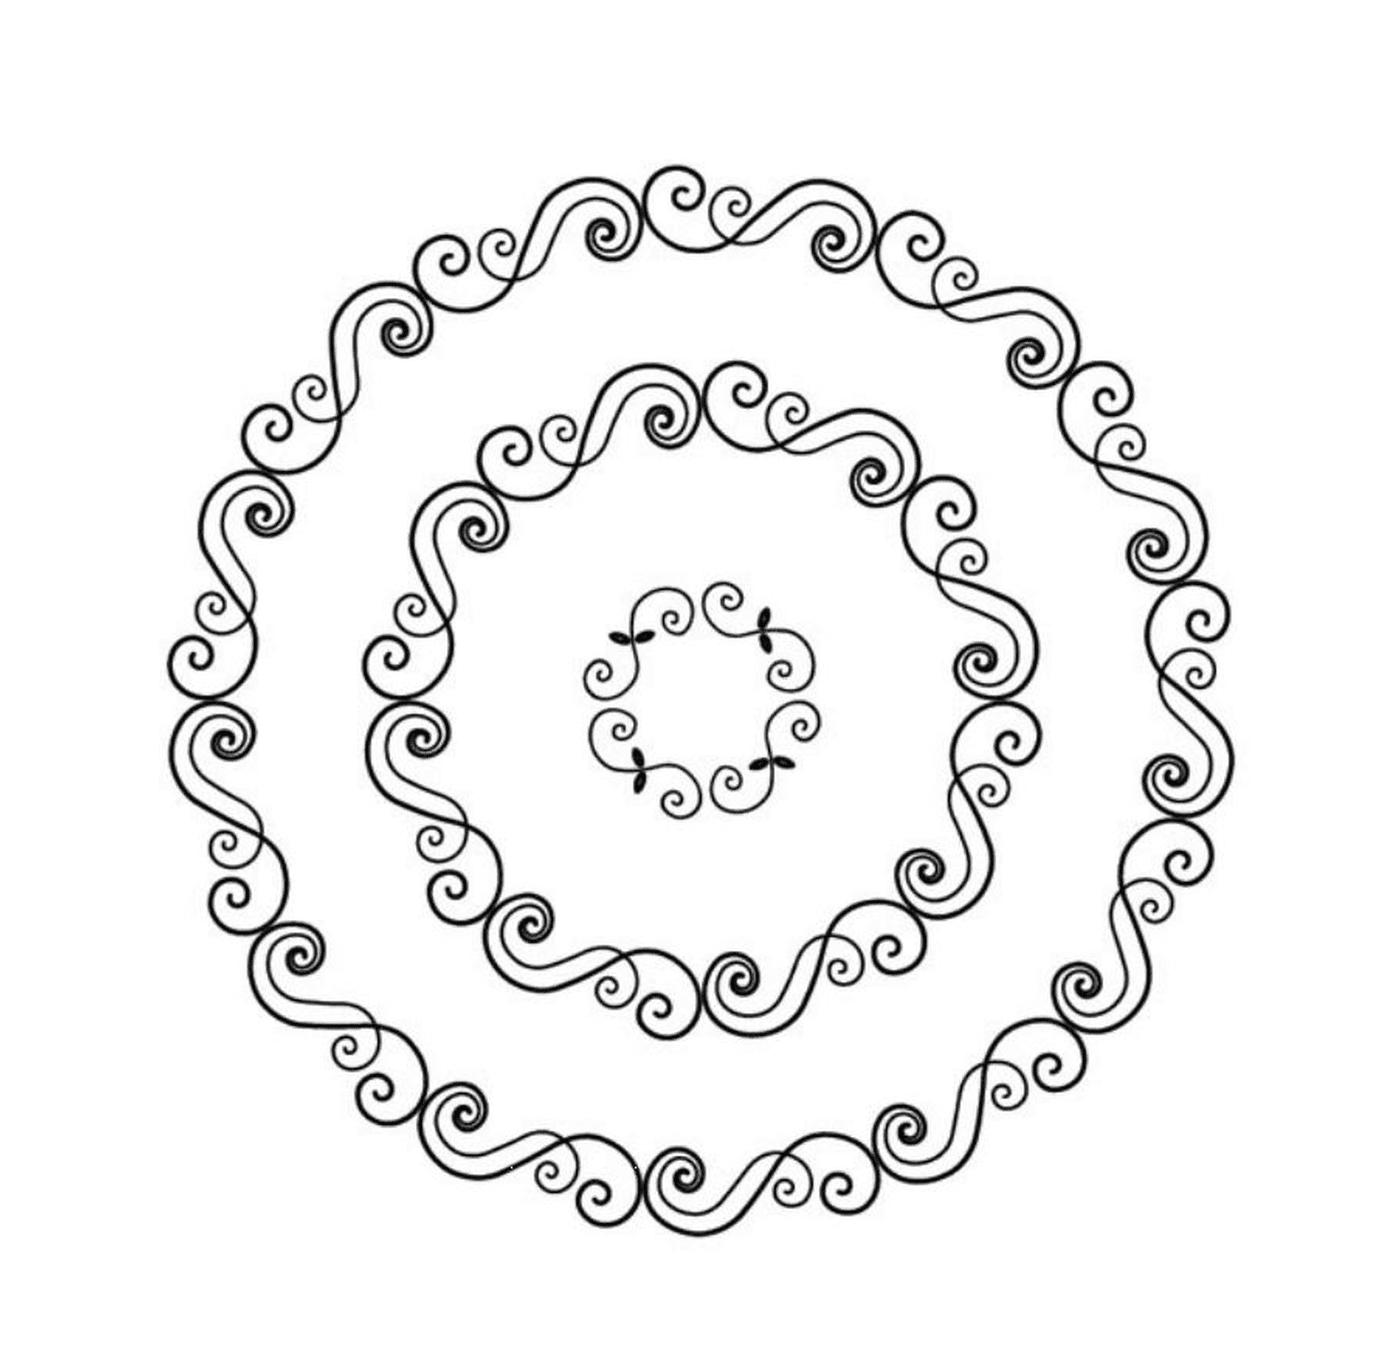  Four spiral mandalas 